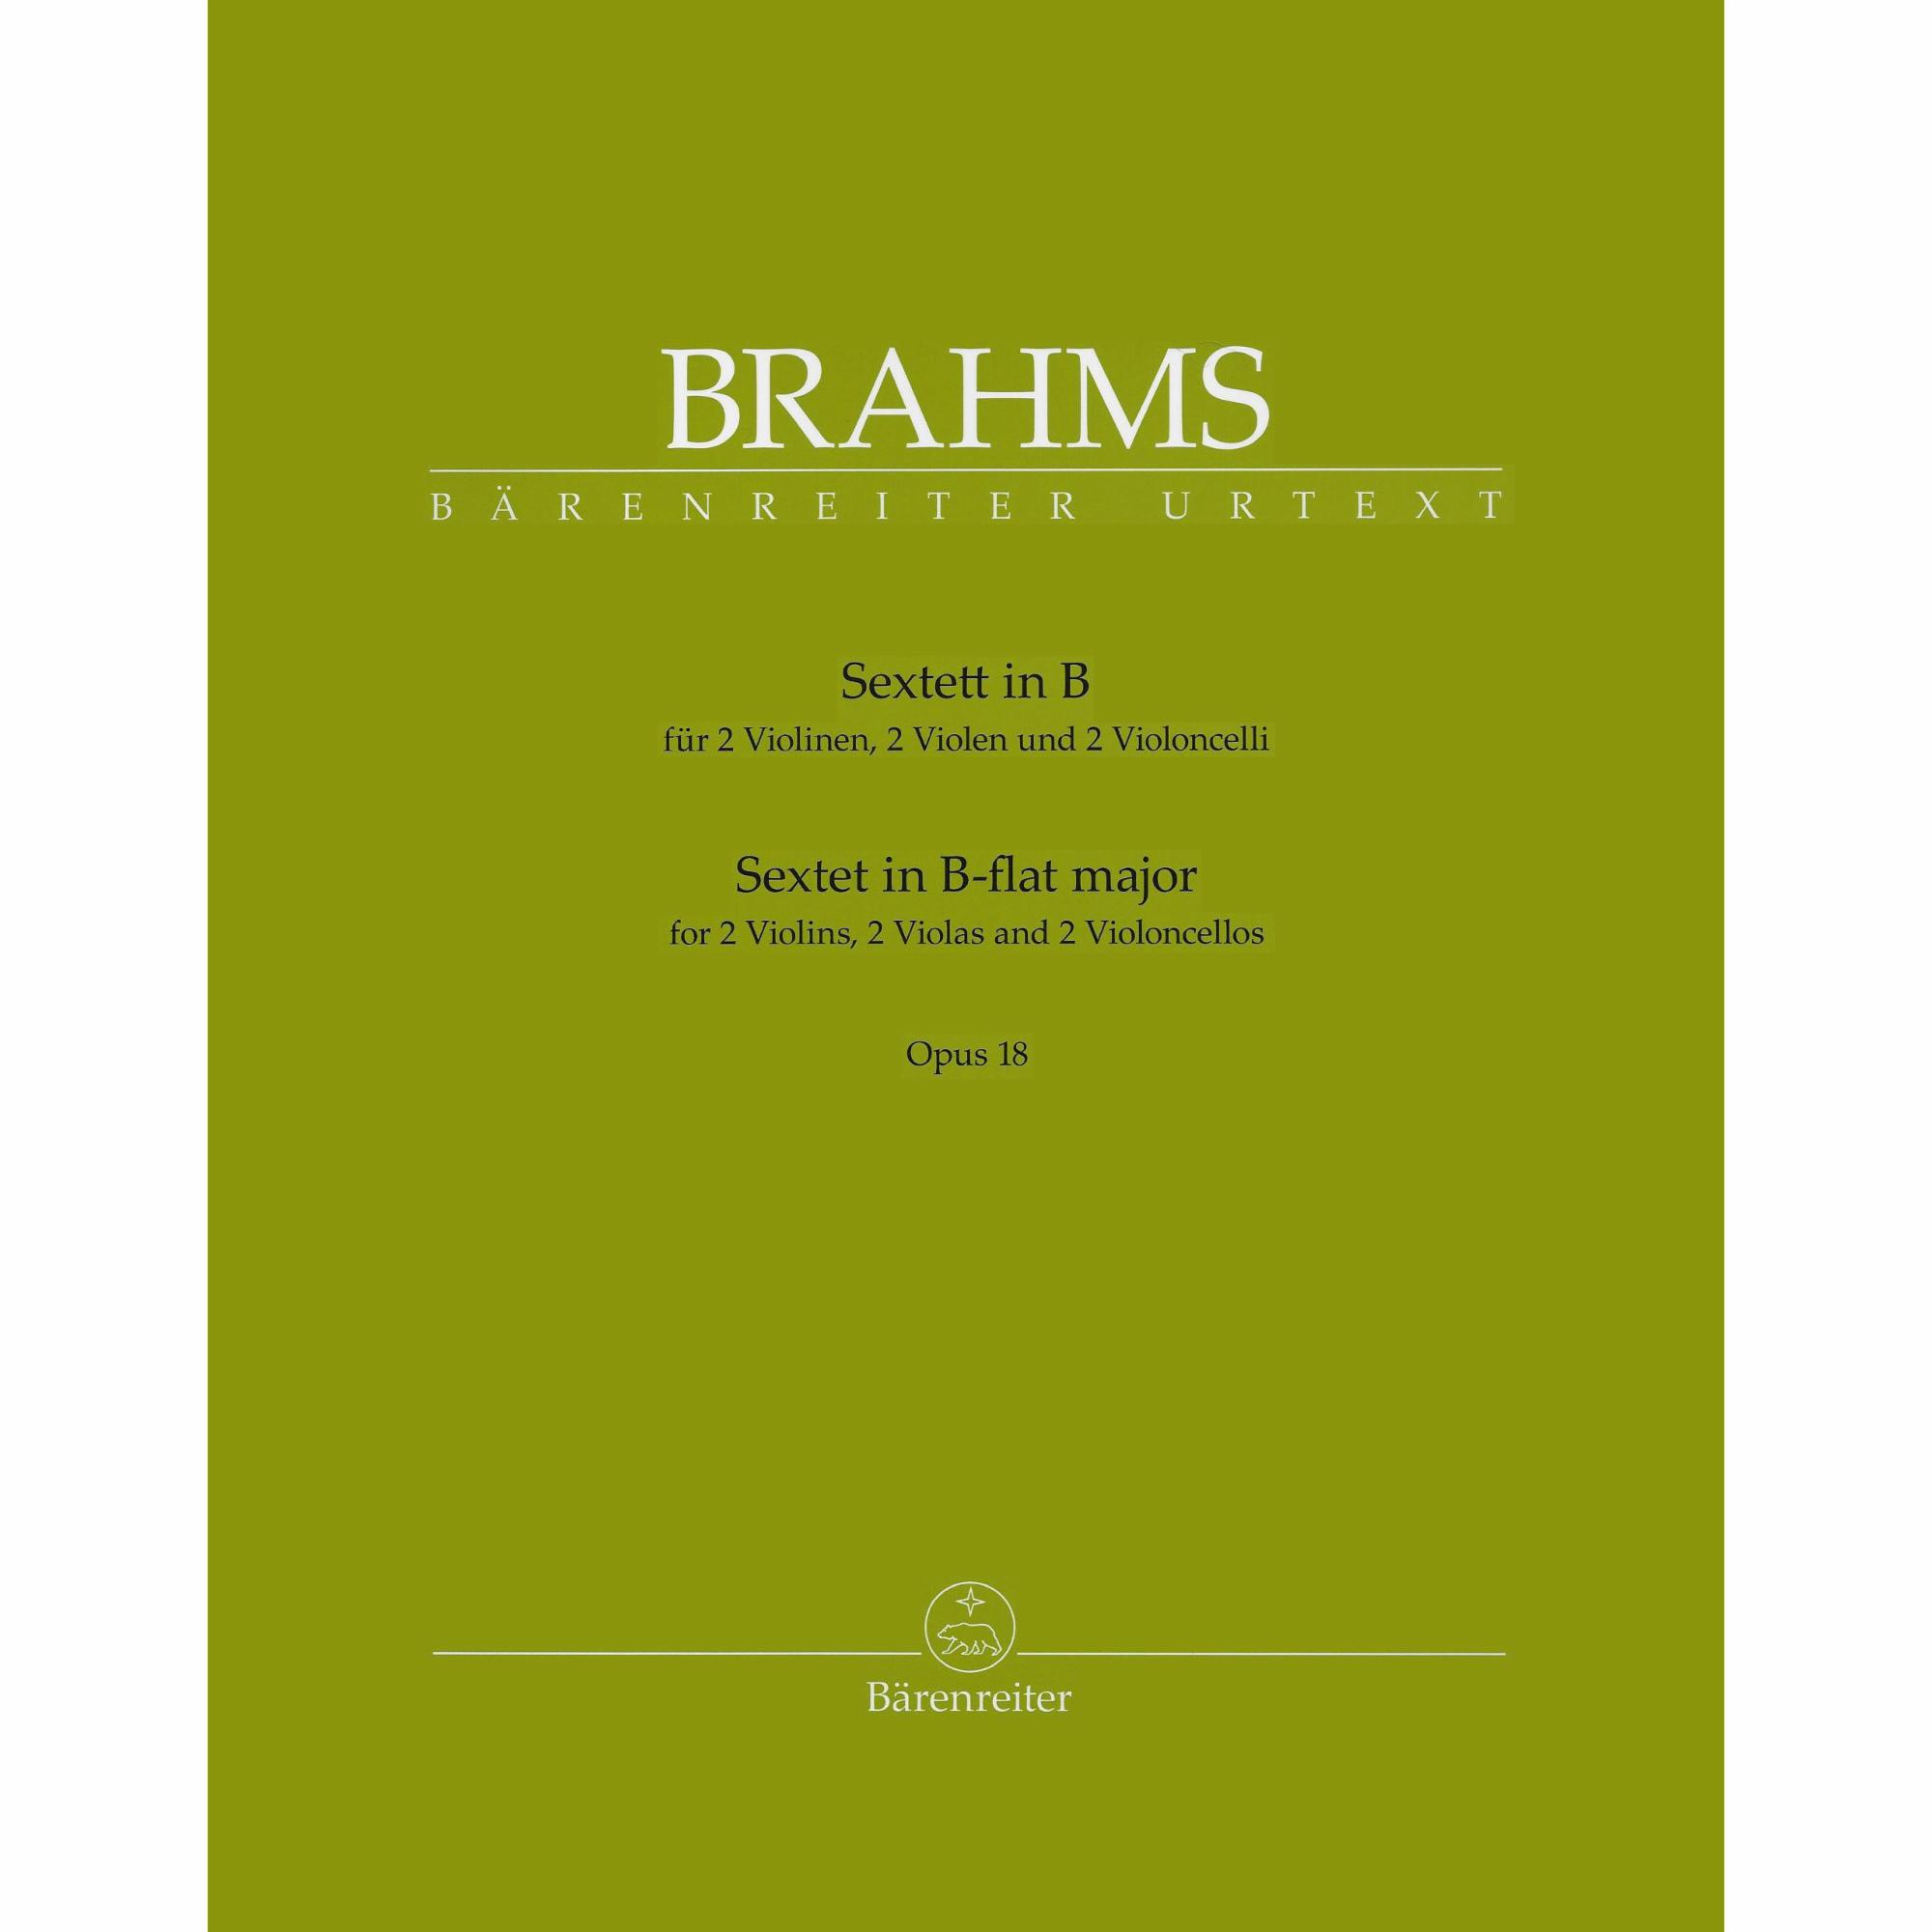 Brahms -- String Sextet No. 1 in B-flat Major, Op. 18